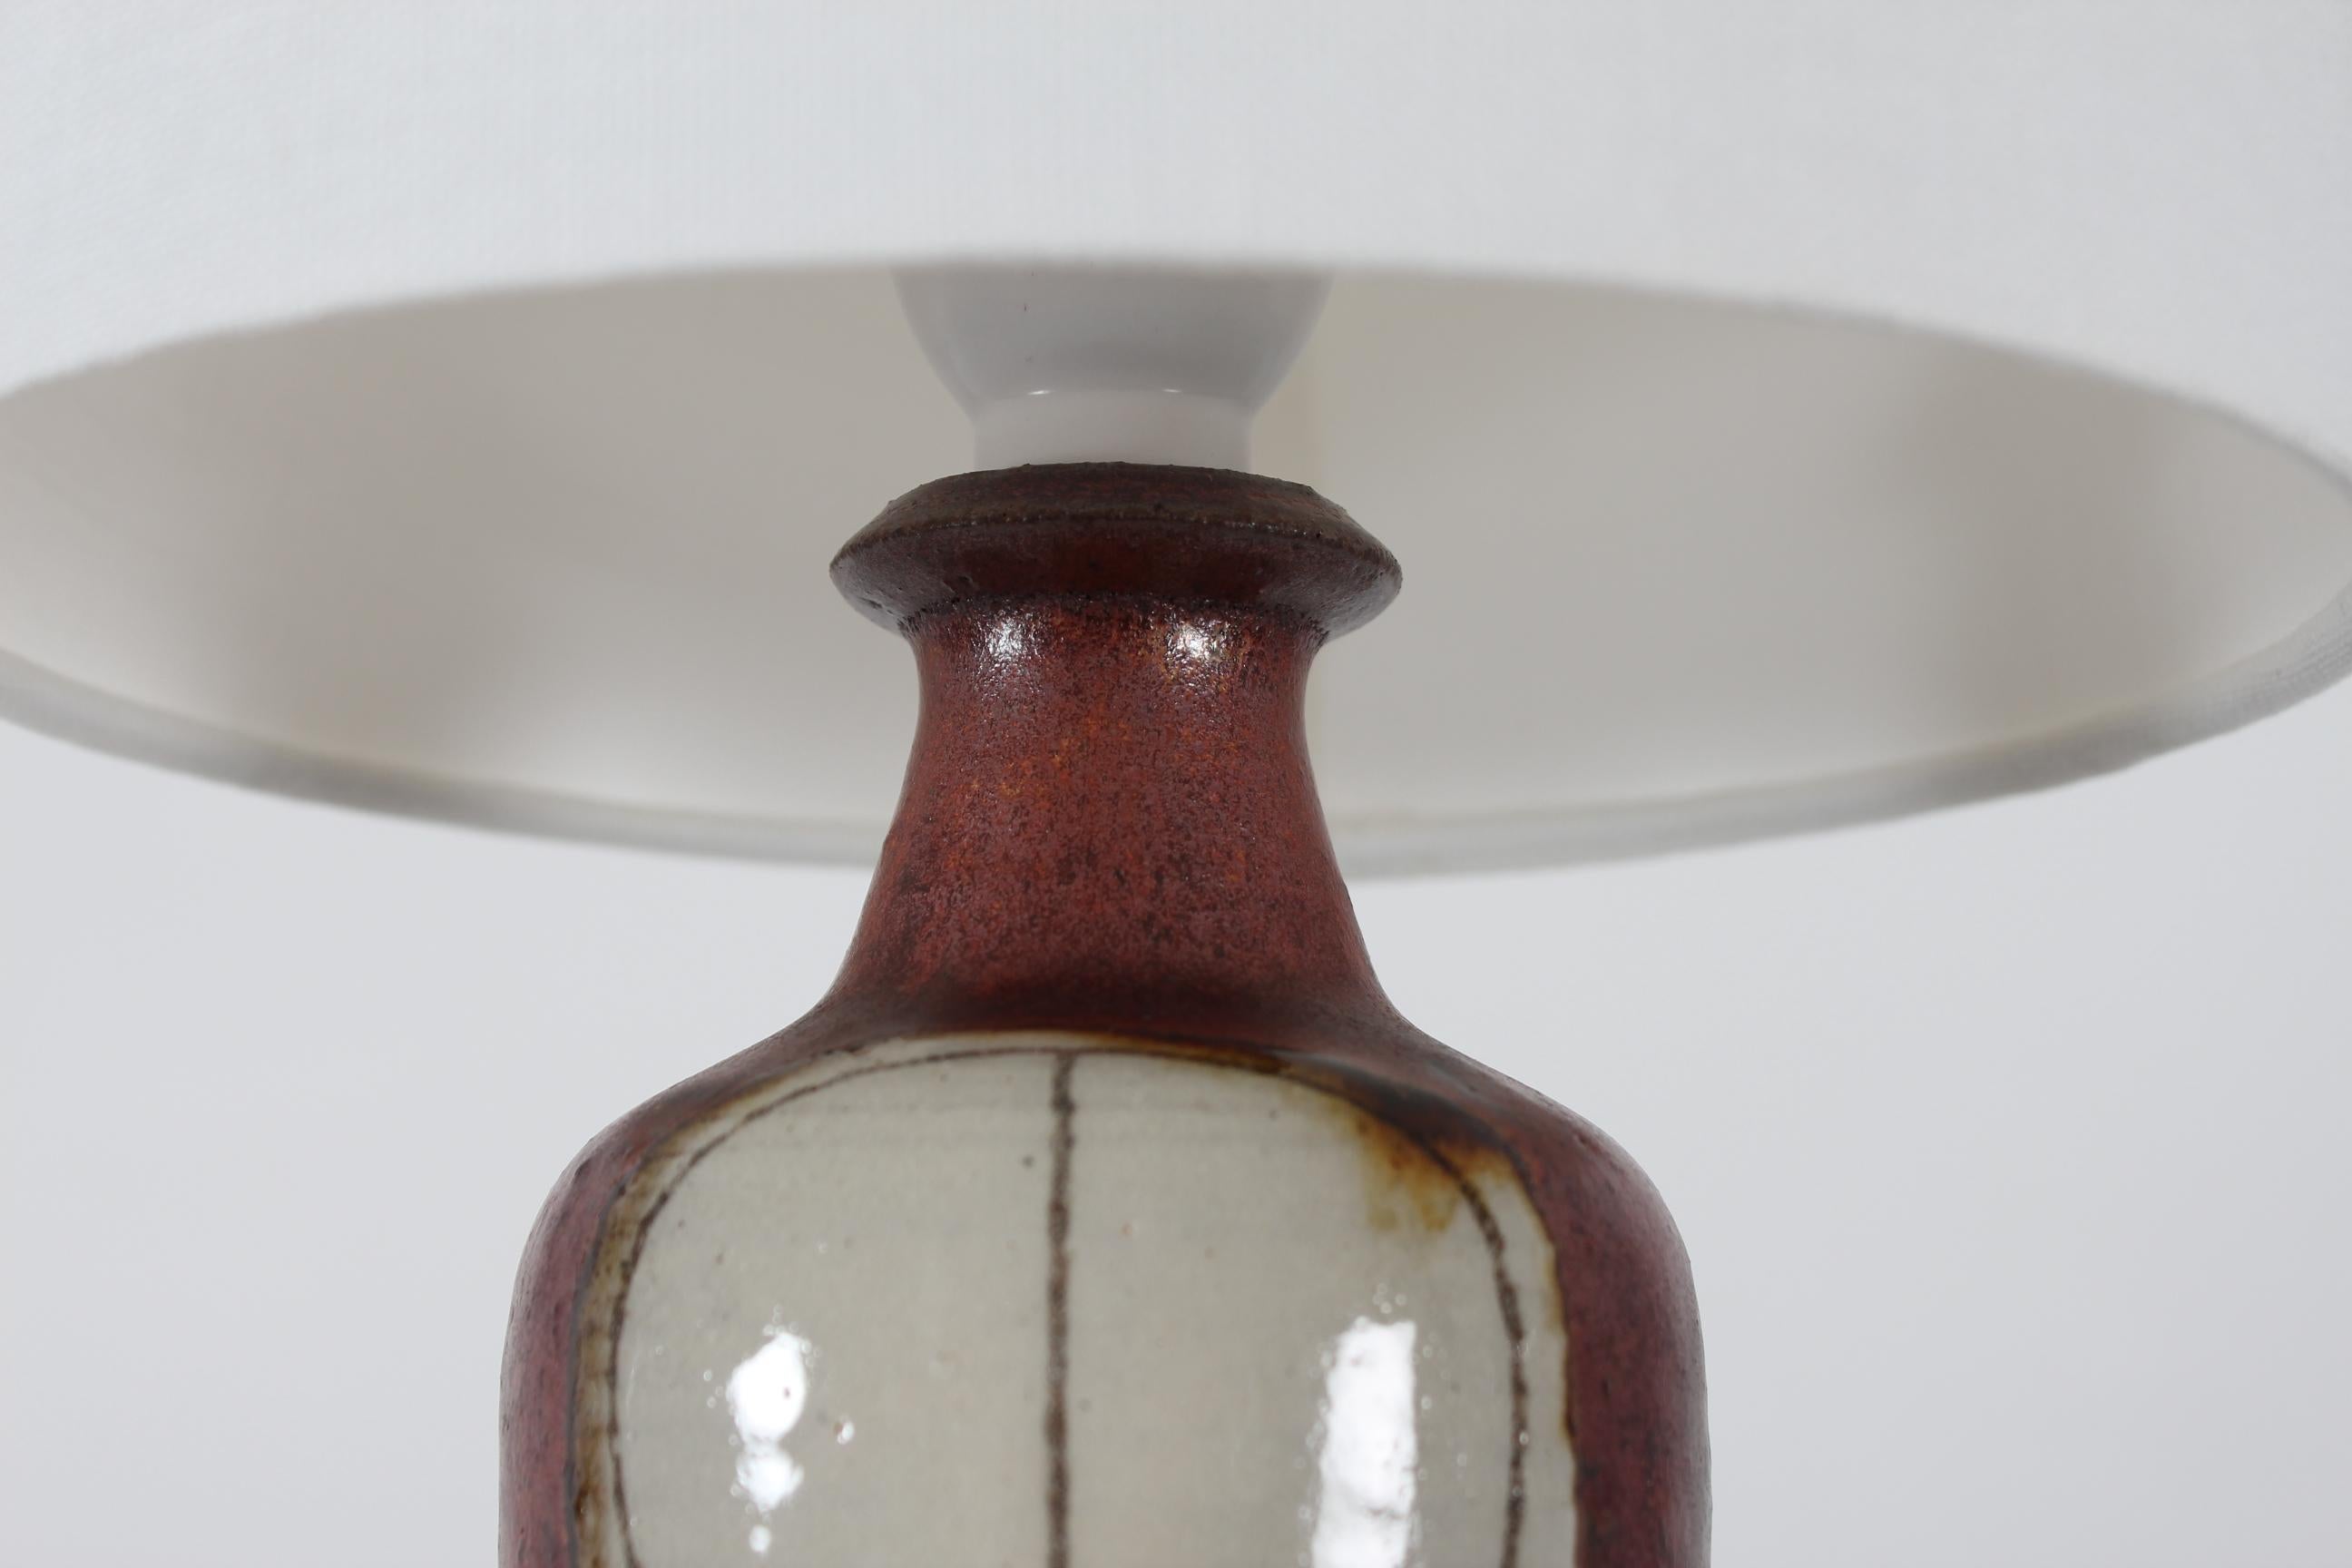 Unique Gunver Bilde Sørensen Sculptural Ceramic Table Lamp New Shade Denmark 70s For Sale 1